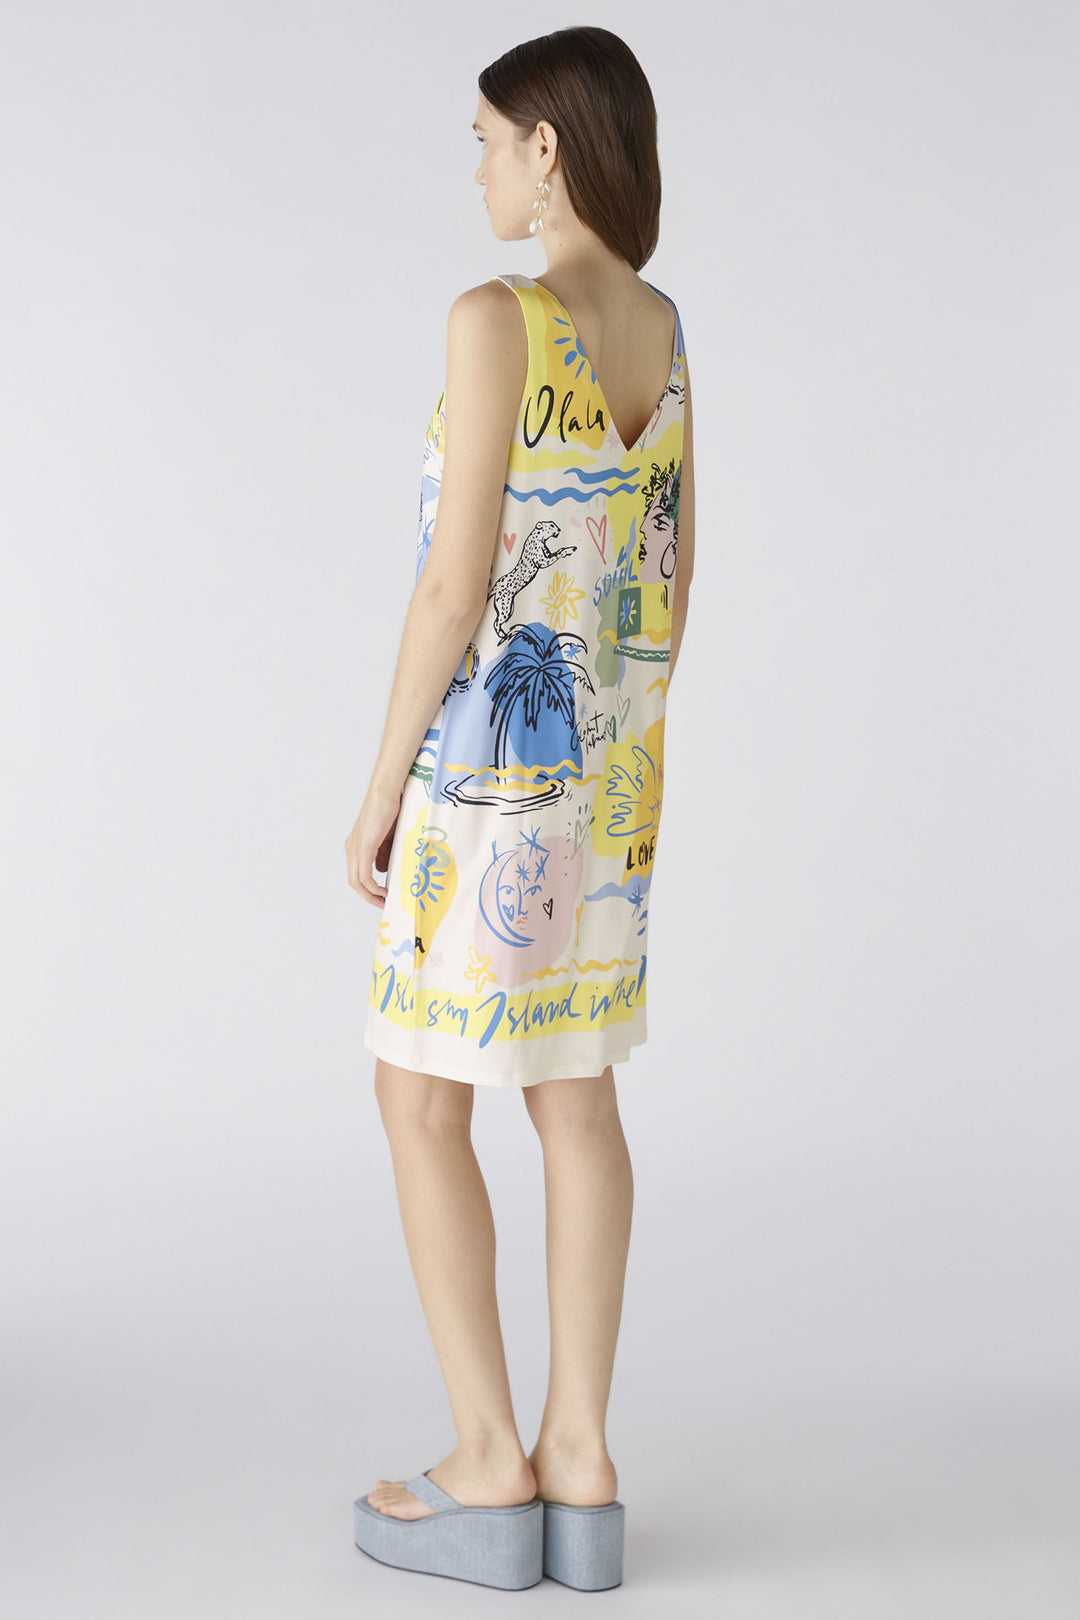 Oui 87319 Yellow Blue Summer Love Print Sleeveless Dress - Olivia Grace Fashion